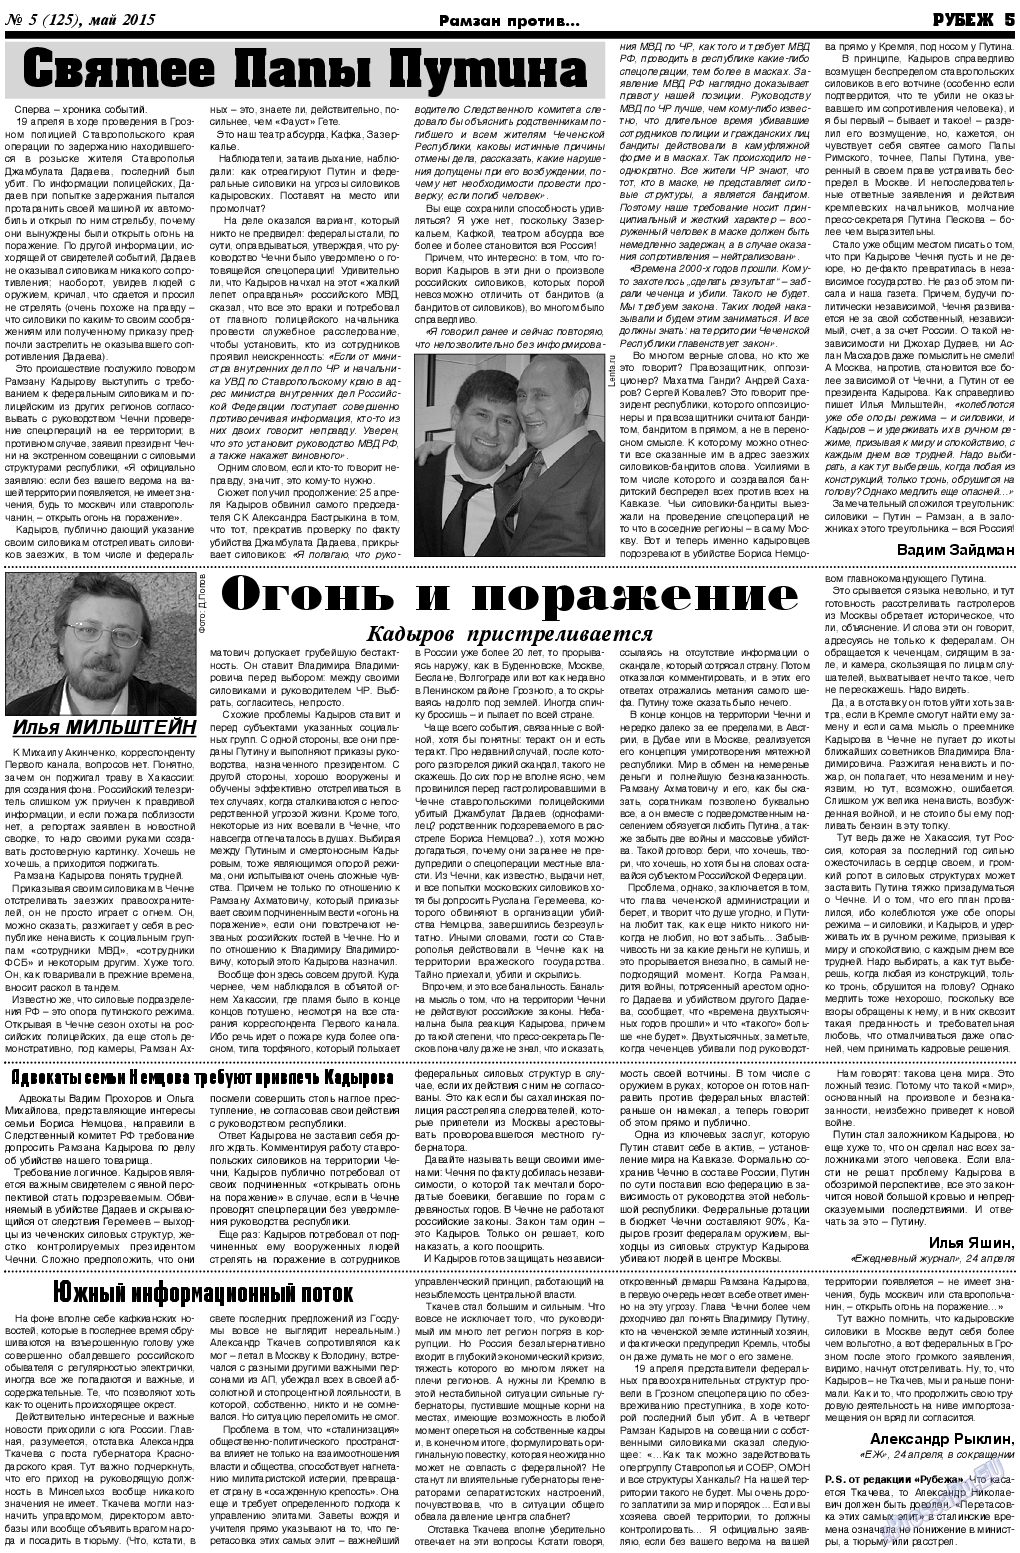 Рубеж, газета. 2015 №5 стр.5